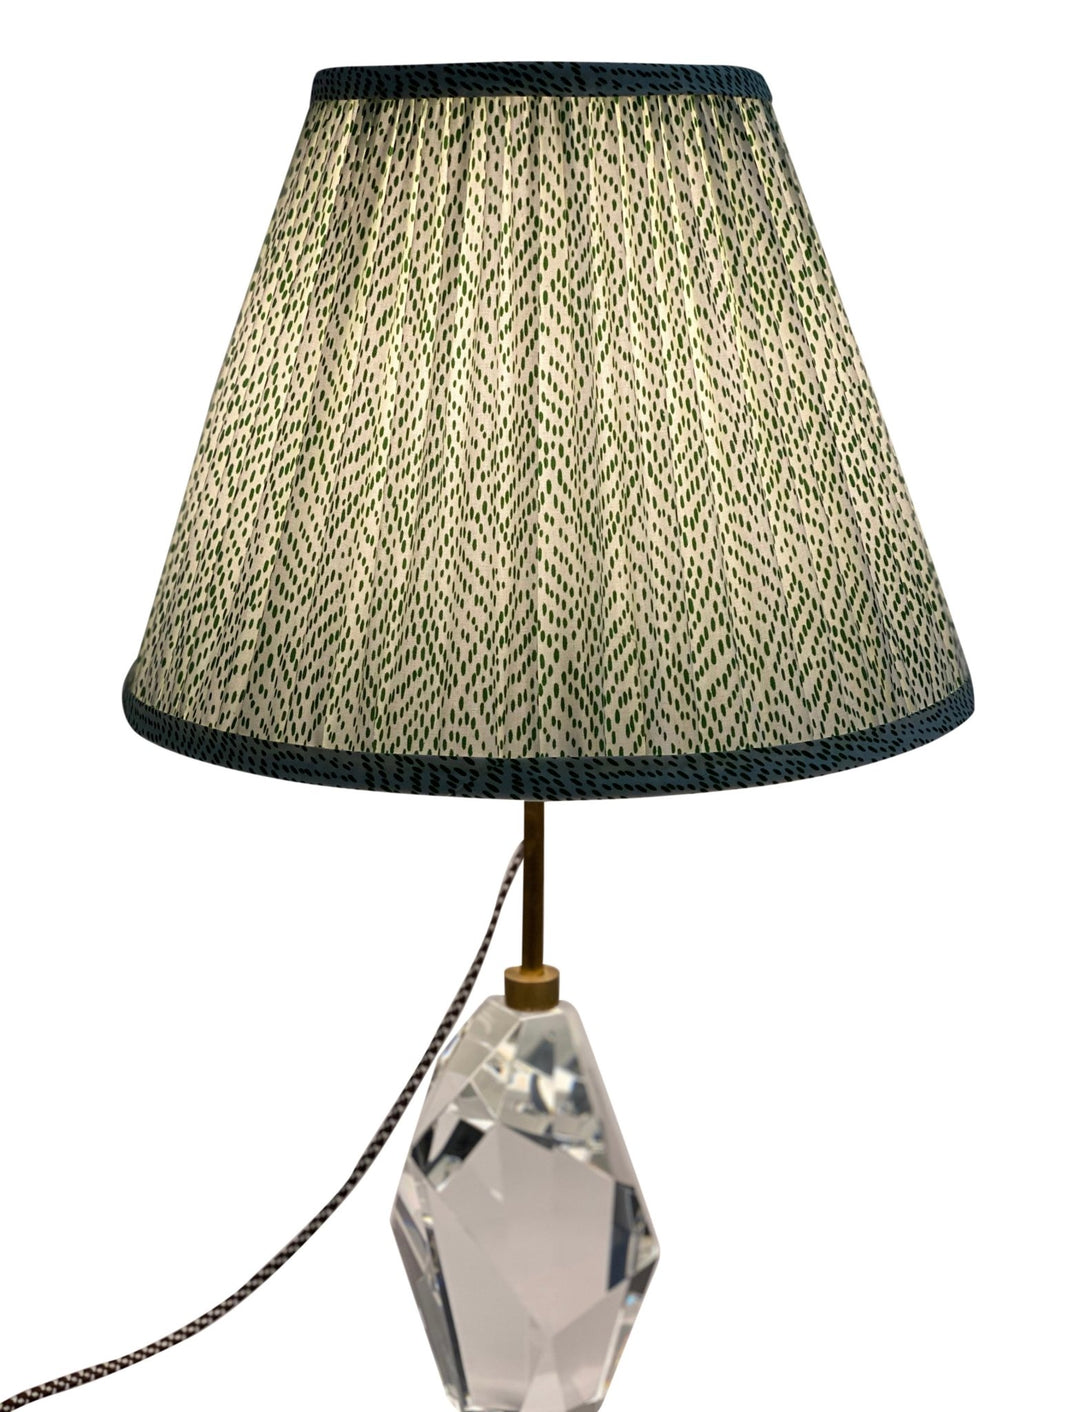 Schumacher Fabric 177762 | Duma Diamond, Green - Gathered 16" Lampshades - Lux Lamp Shades